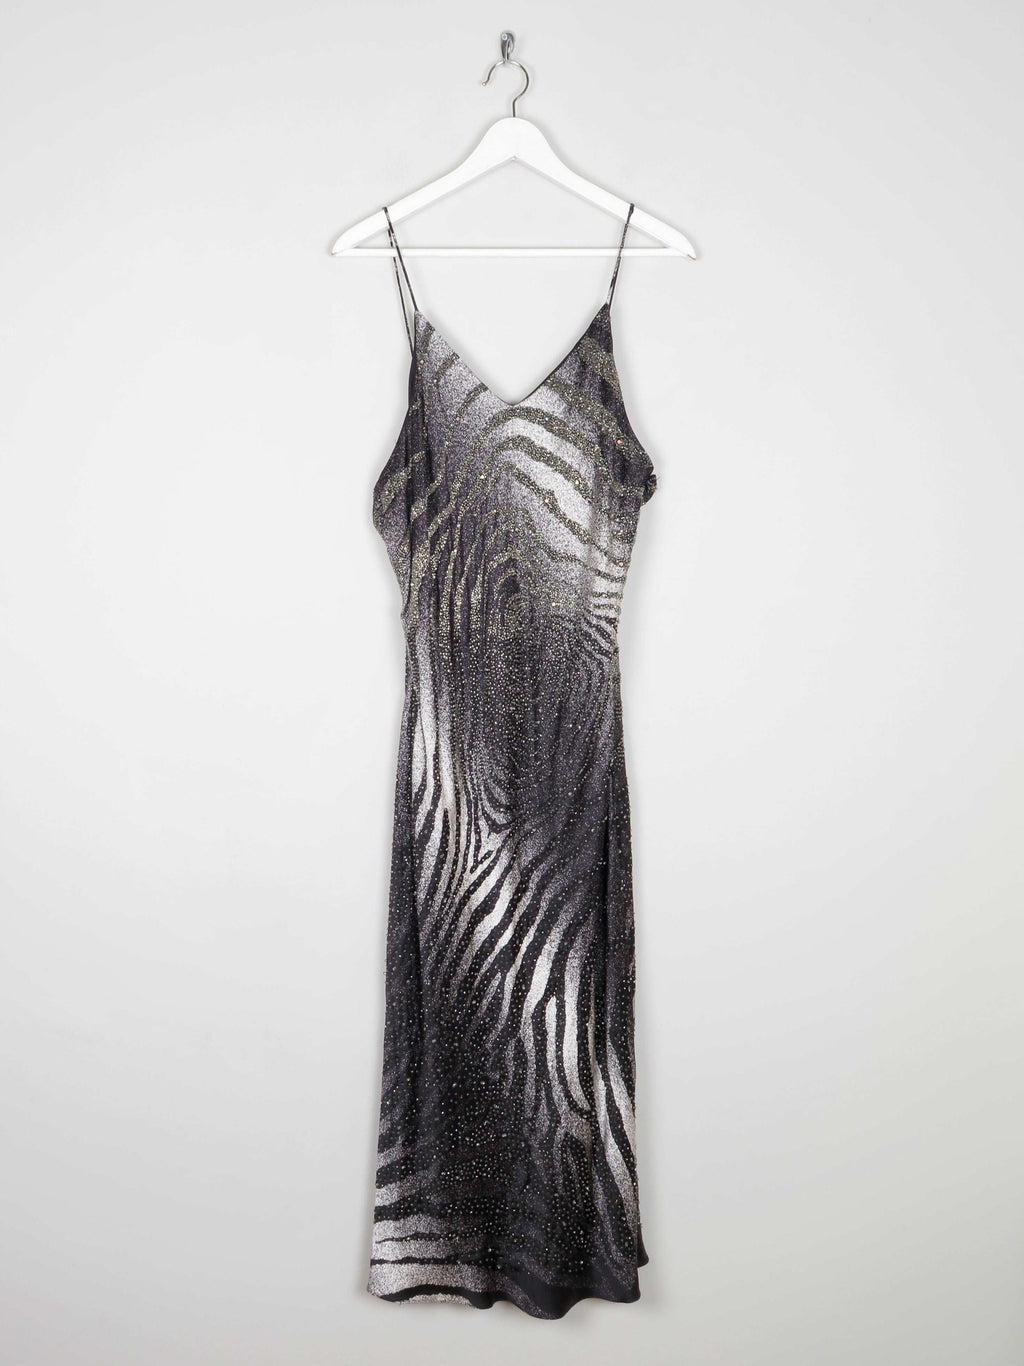 Black & Grey Animal Print Beaded Bias Cut Dress L